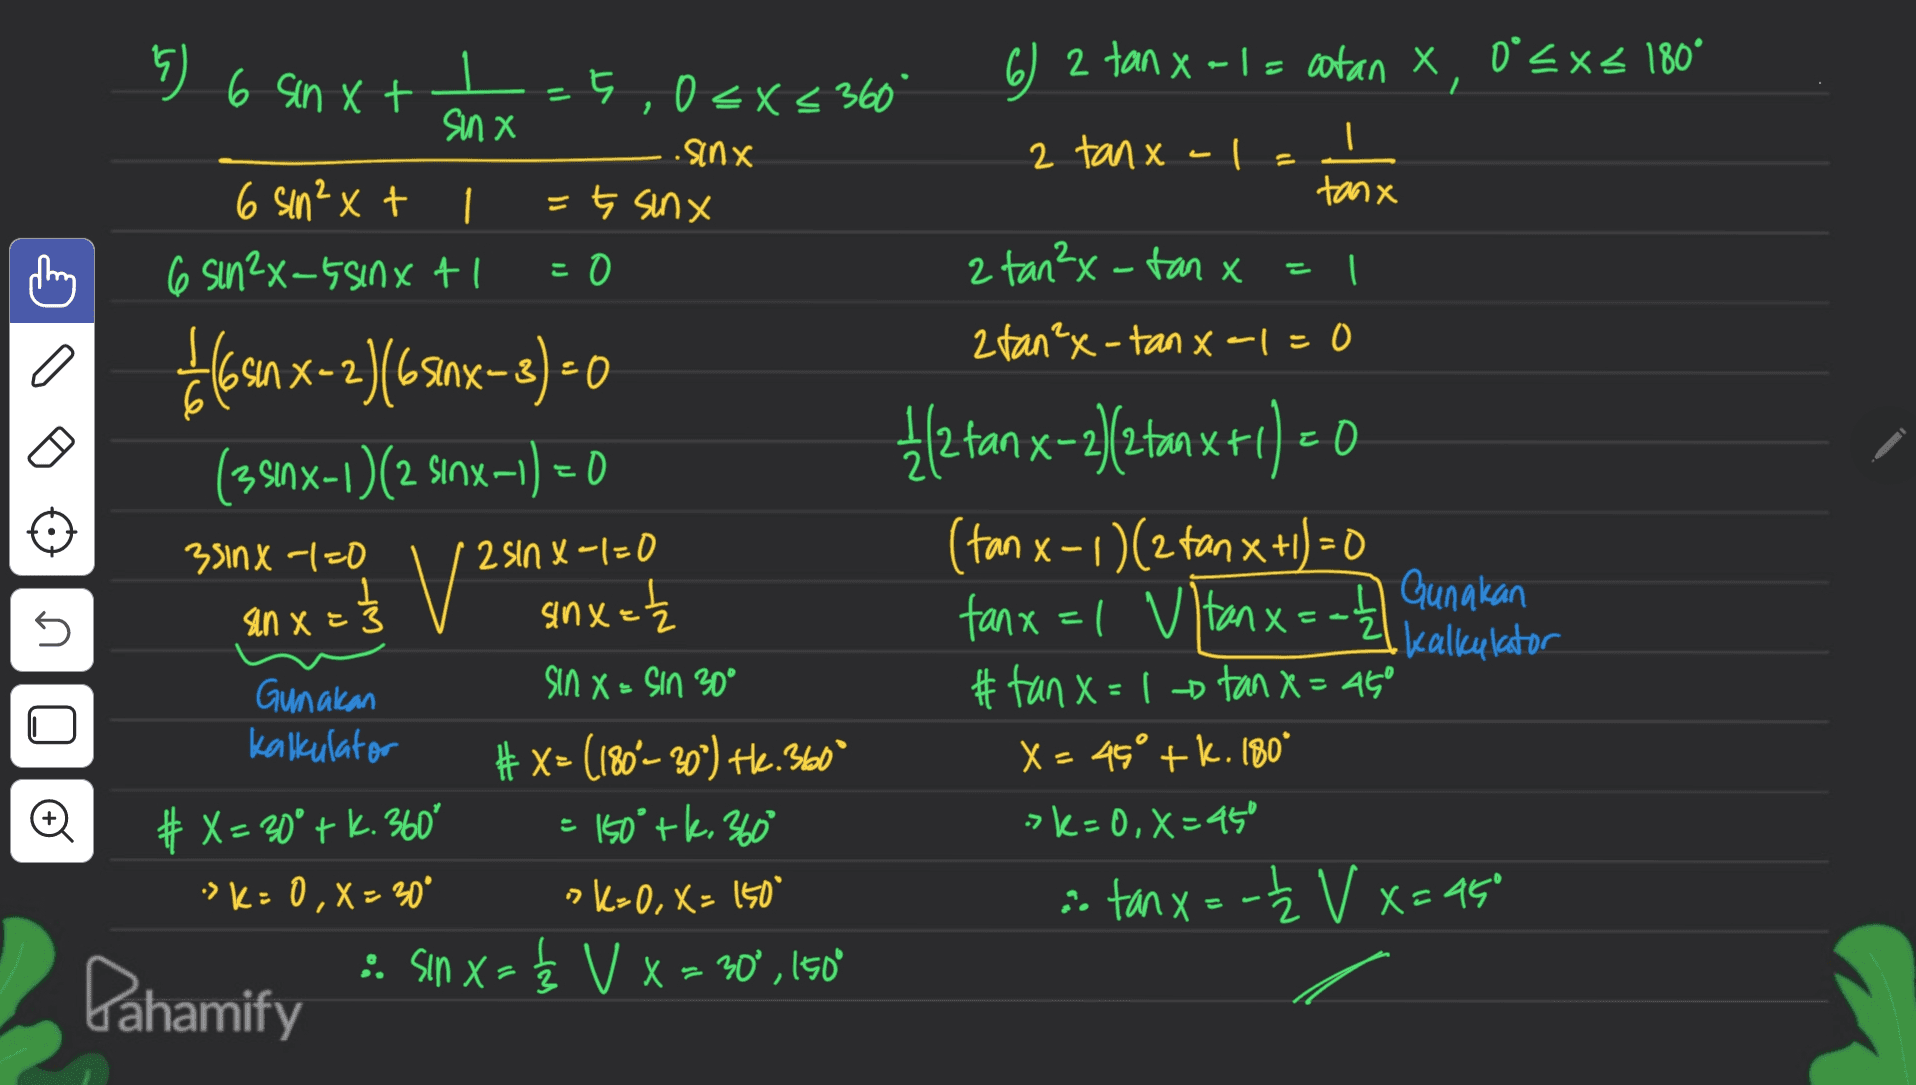 - %) 6 sinxt - 5,0x 6) 2 tan x-1 = cotan x 0°<x< 180° 0<x< 360° sinx .sinx 2 tan x-l 6 sin²x+ 1. =ţ sinx tanx 6 sin2x-5 sinxt 0 2 tan2x -tan x=1 2 tan²x-tan x-1=0 bosan x2)(- 60 X-2)(65inx-3) = 0 -1) = 0 1/2 tan x-2)/2 tanxt (351x-1)(2 Sinx-1) = 0 (+ 351NX -1=0 ' 2 sinx-1=0 (tan x - 1)(2 tan x +1) = 0 1 V? Gunakan sinx= sin x=3 fanx=1 vtanx = -2 • Kalkulator Gunakan sin X-Sin 30° #tanx=1tan x= 45° Kalkulator #x= (180 – 20°) He. 360 X= 46° + k.180° # X = 30° + k. 360° = 150° tk. 3600 ->k=0, x=45 ->K= 0,X - 30 ok-0, x= 150 i tanx=- Ž V x=95 = :: Sin x = { V x = 30°, 150° n 는 = Pahamify 